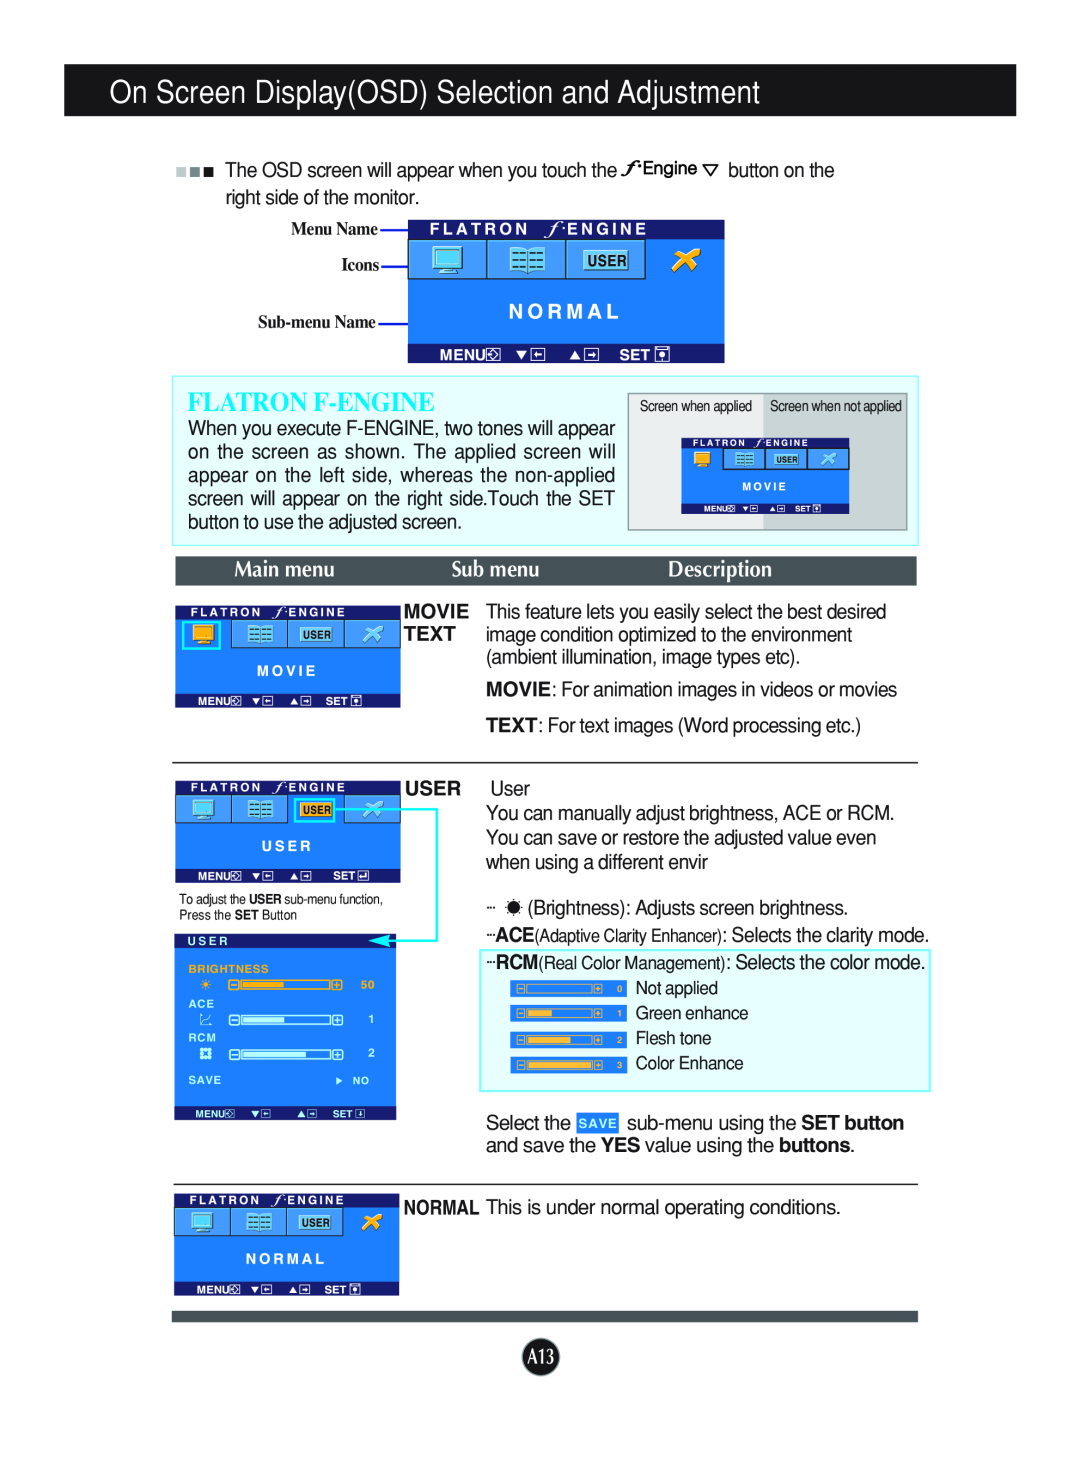 LG Electronics L1752TX On Screen DisplayOSD Selection and Adjustment, Flatron F-Engine, Main menu, Sub menu, Description 